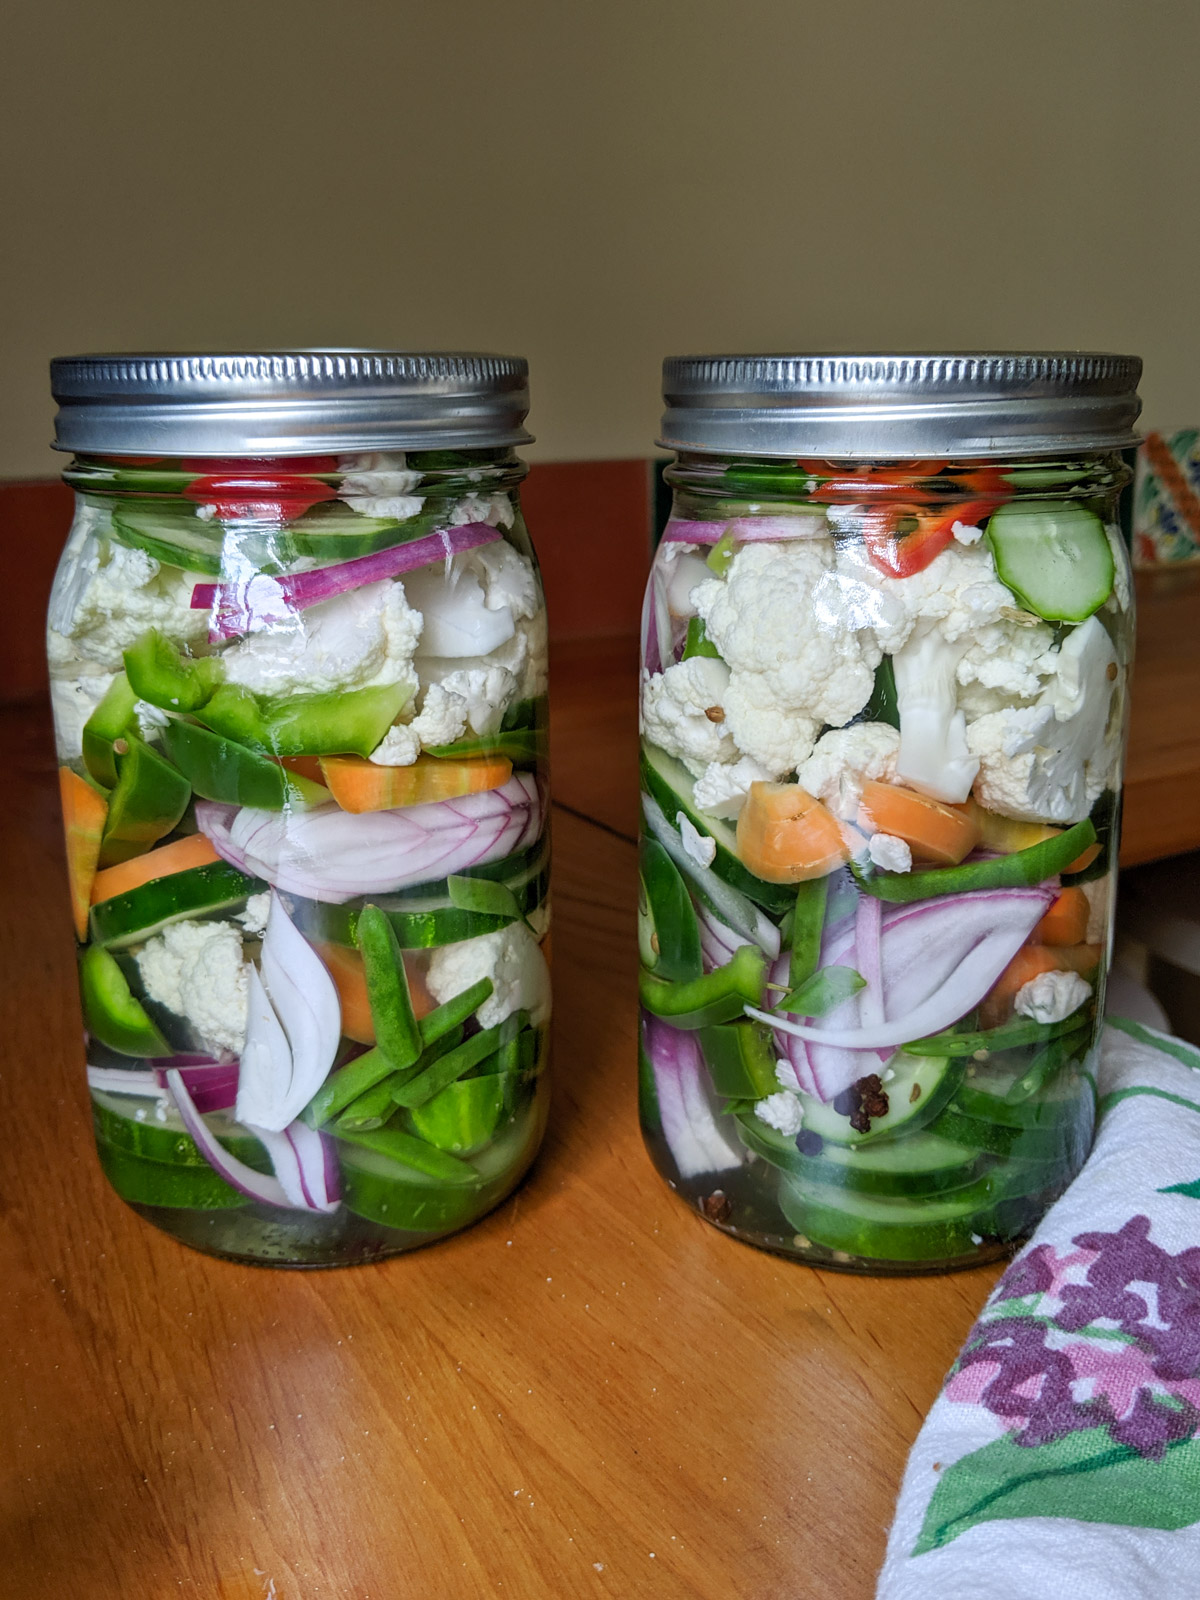 Two jars of giardiniera, pickled fresh garden vegetables.